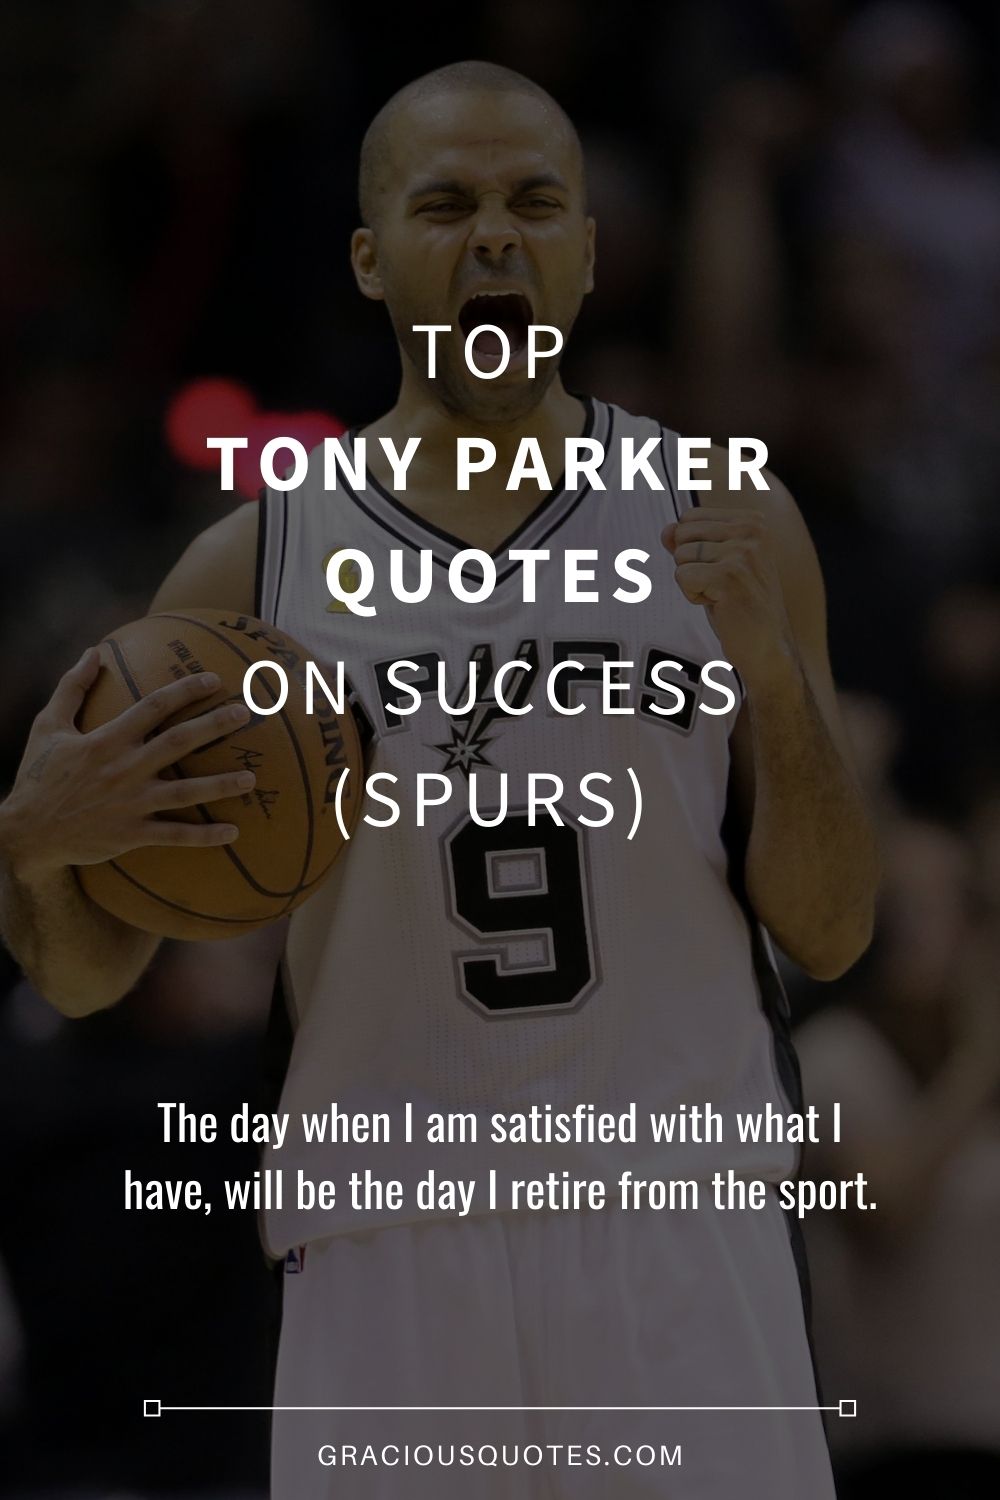 Top Tony Parker Quotes on Success (SPURS) - Gracious Quotes